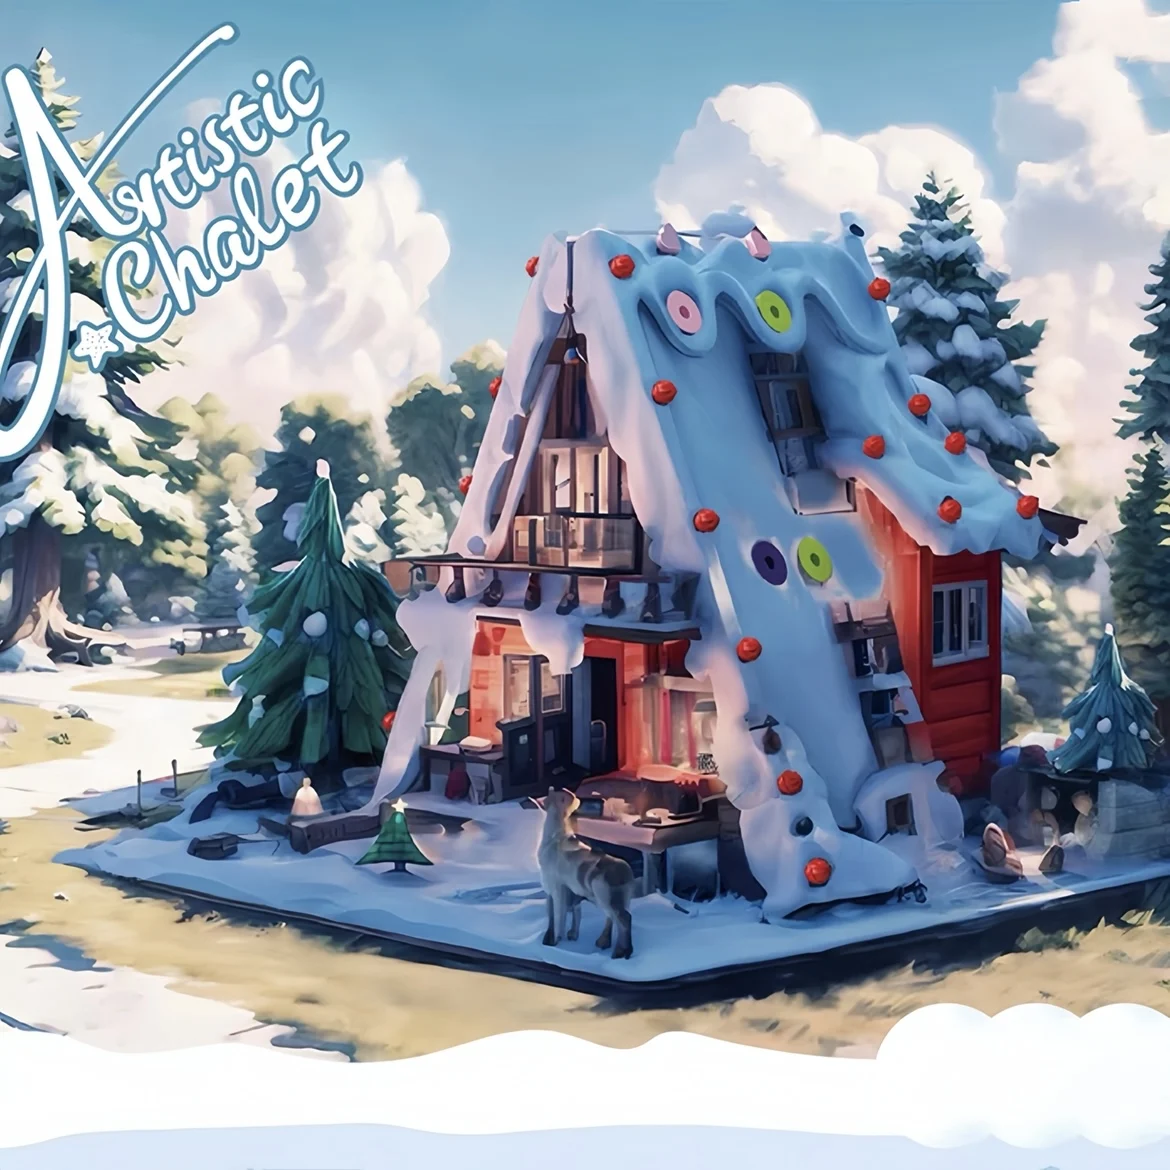 

2023 New Creativity Winter Village Fantasy Christmas Cabin Mini Building Blocks House Bricks Toys for Kids Christmas Gifts